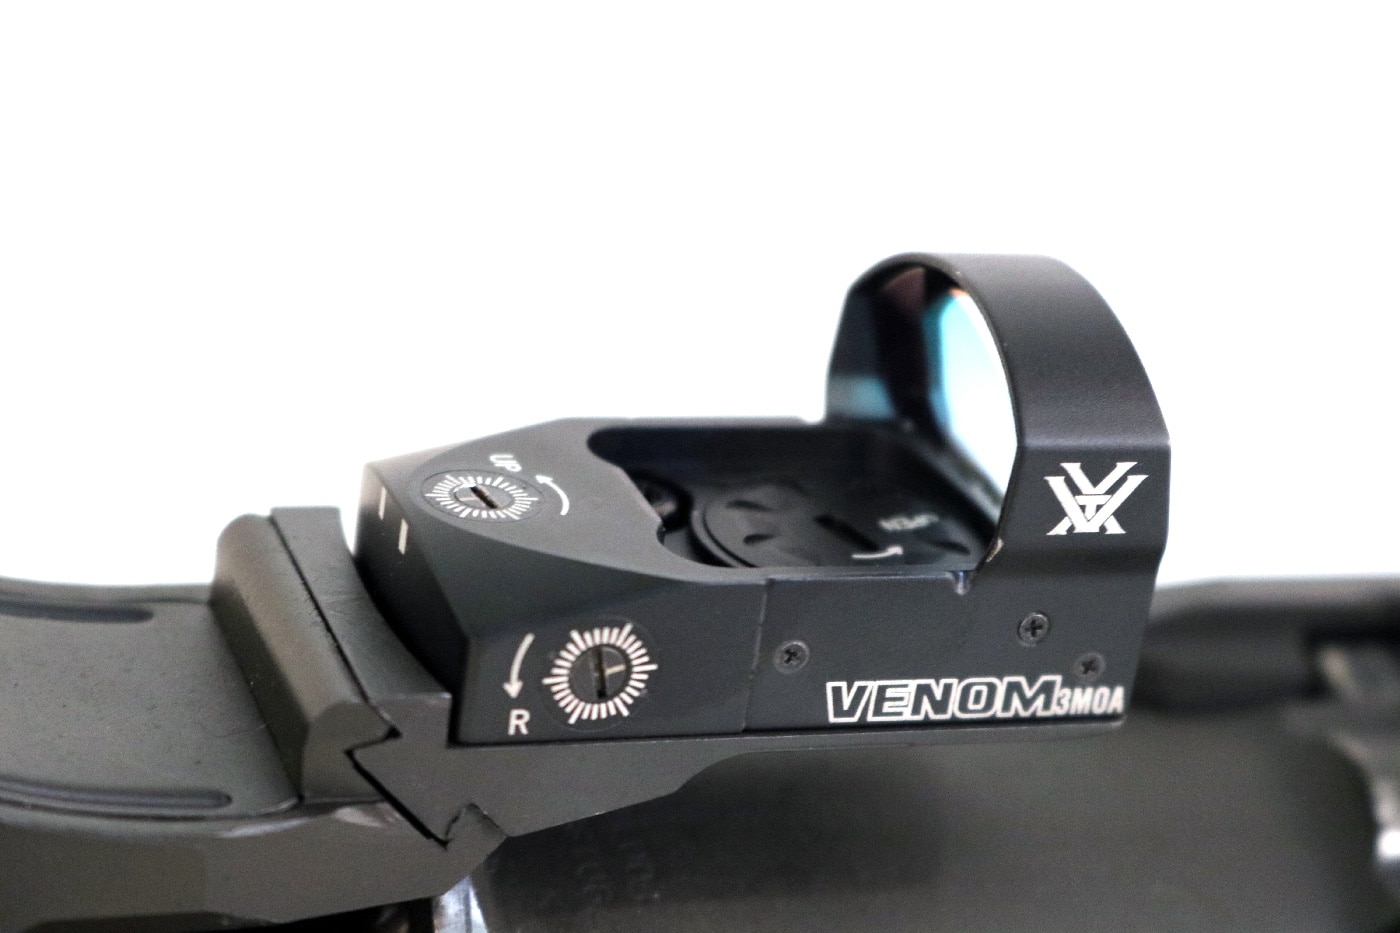 Vortex Venom red dot sight for SOCOM 16 308 Winchester rifle